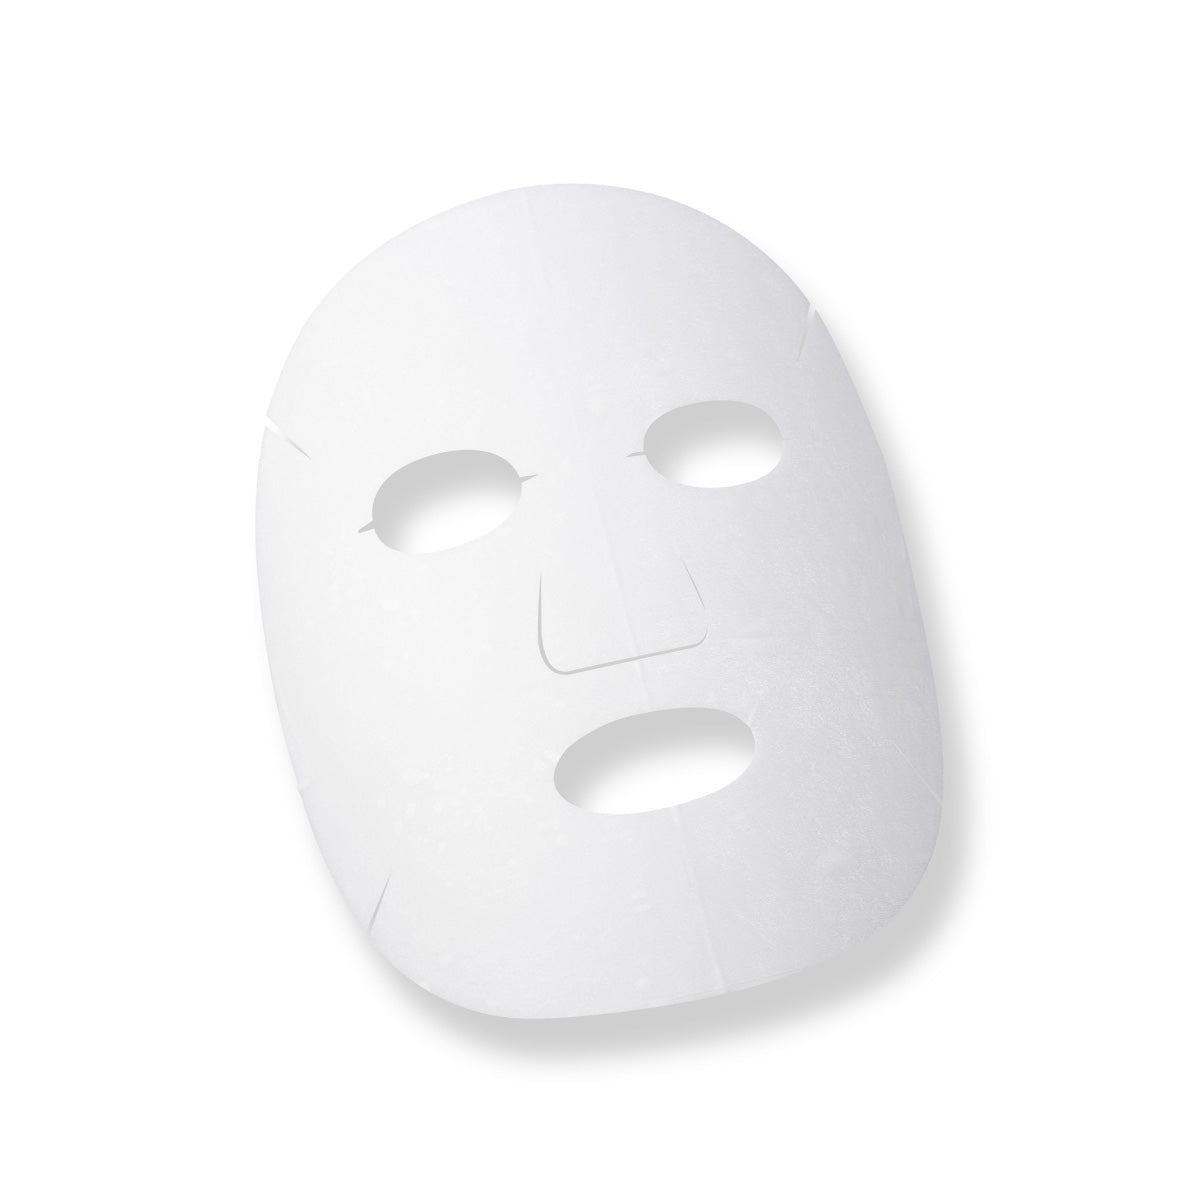 E Special Beauty White Mask [20mL/1 mask]